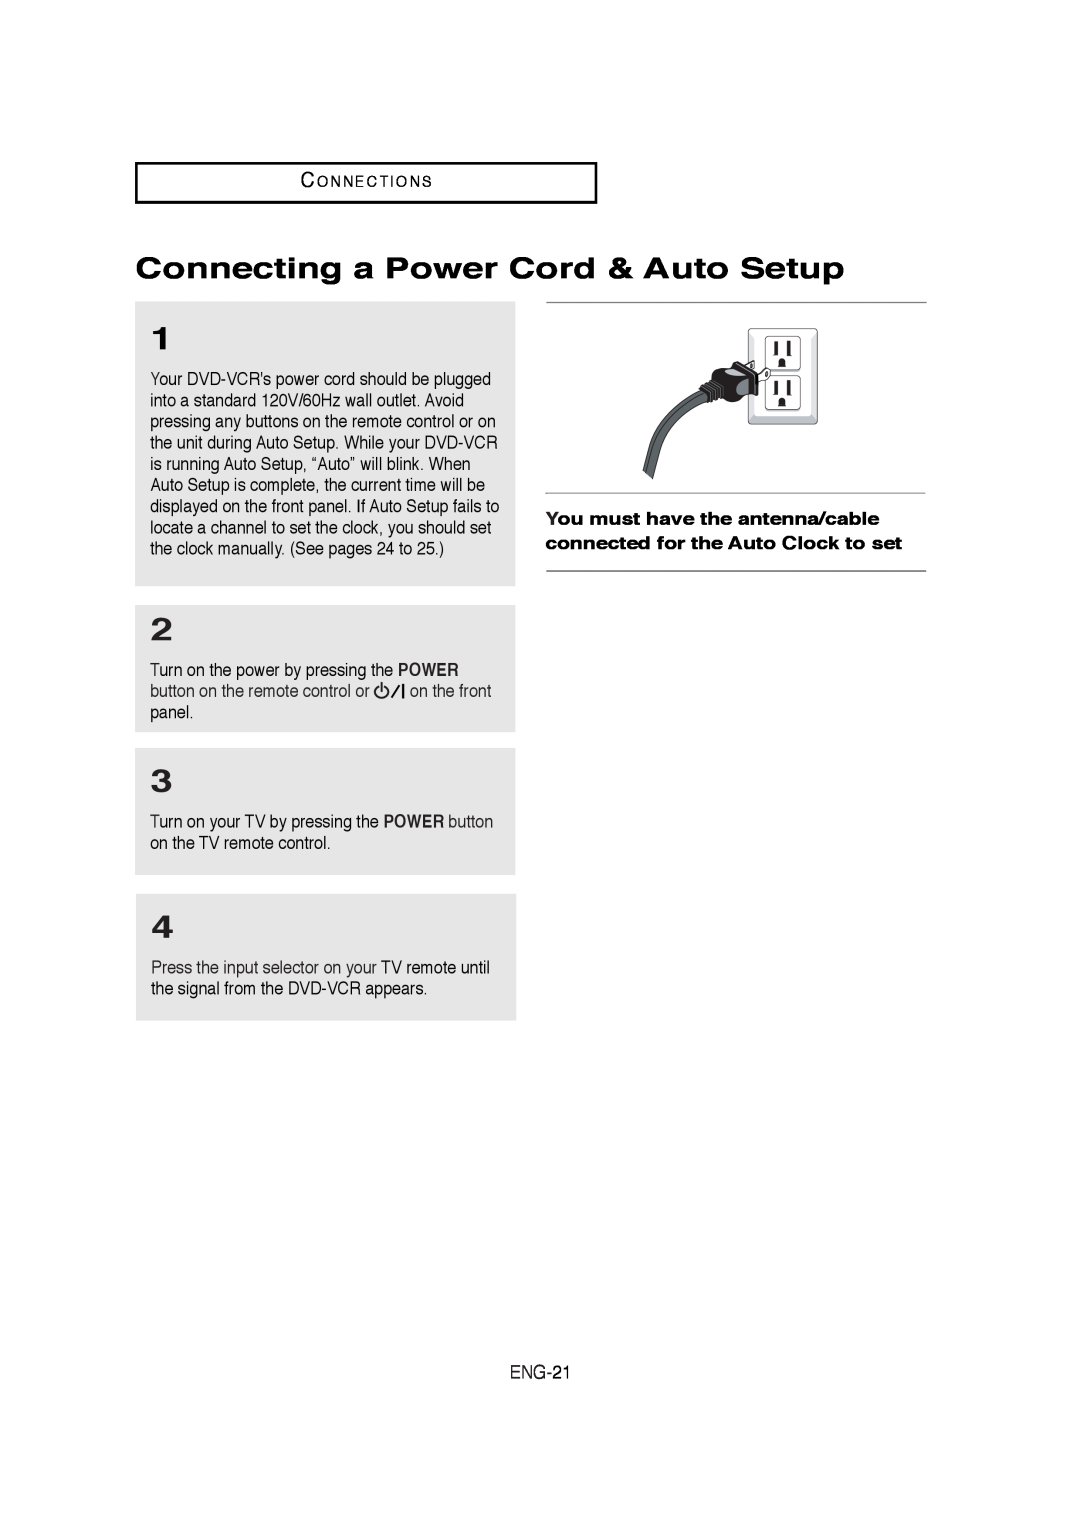 Samsung AK68-01304A, V6700-XAC, 20070205090323359 instruction manual Connecting a Power Cord & Auto Setup, ENG-21 